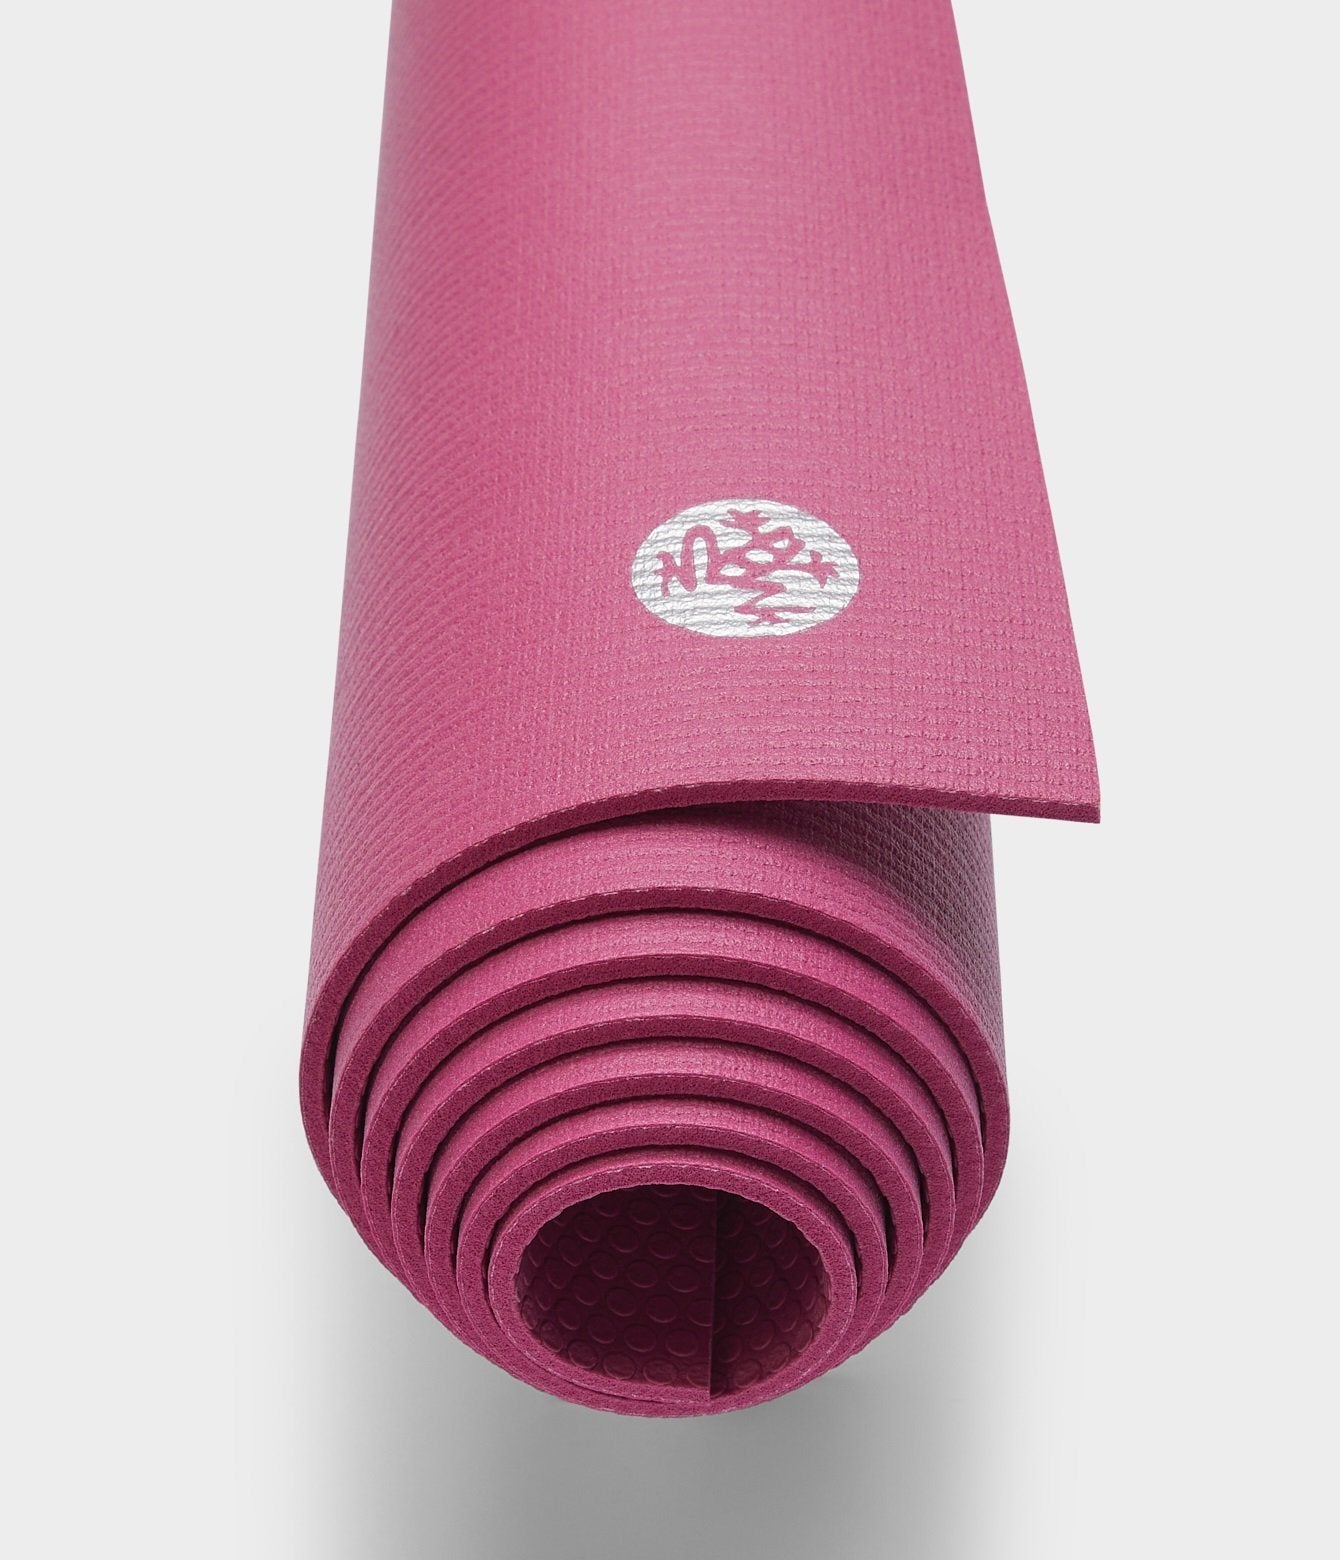 Manduka - GRP® Lite hot yoga mat, 4 mm –